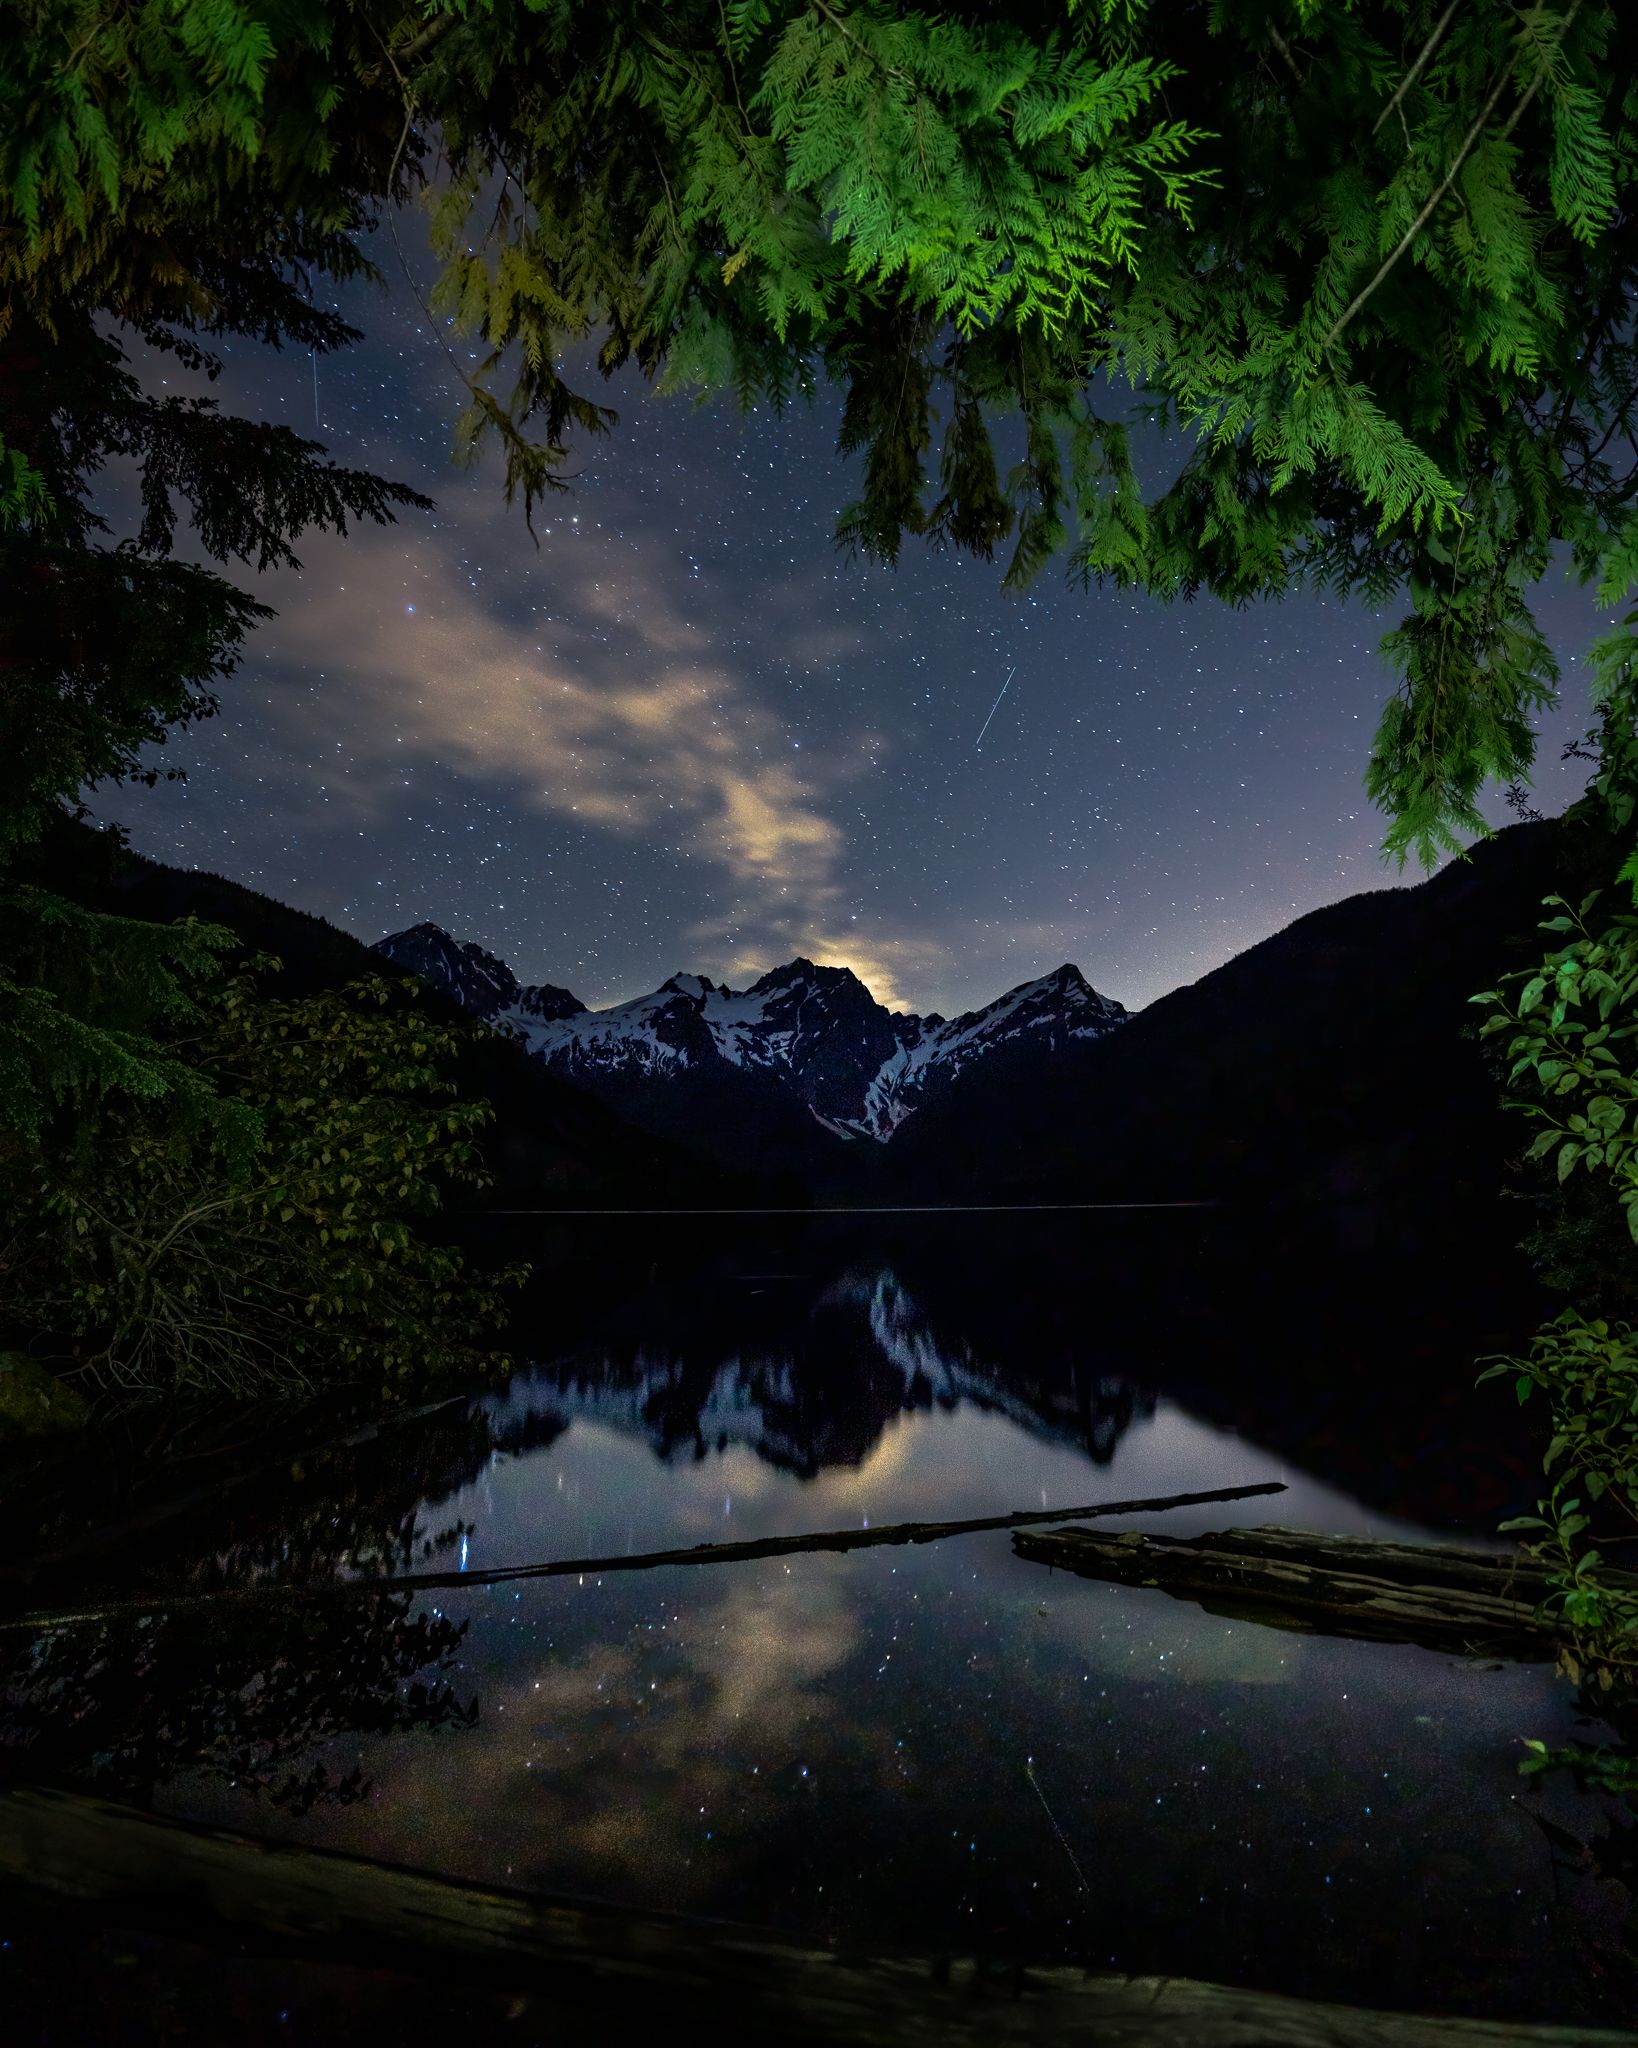 Starry night reflections at Jones Lake, BC